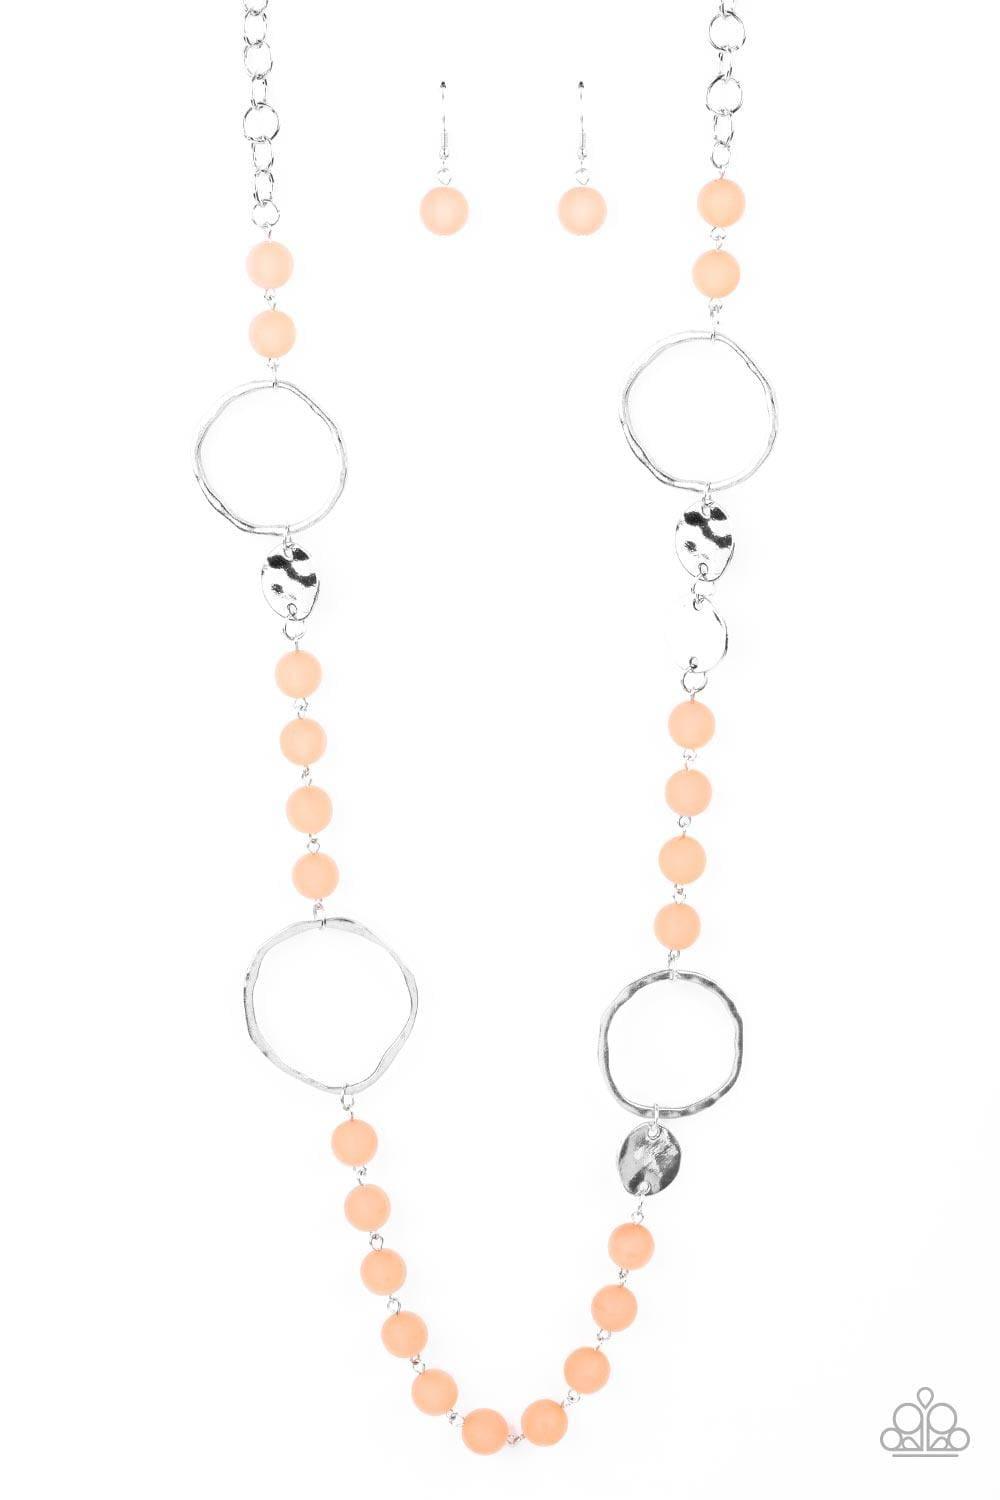 Paparazzi Accessories - Sea Glass Wanderer- Orange Necklace - Bling by JessieK